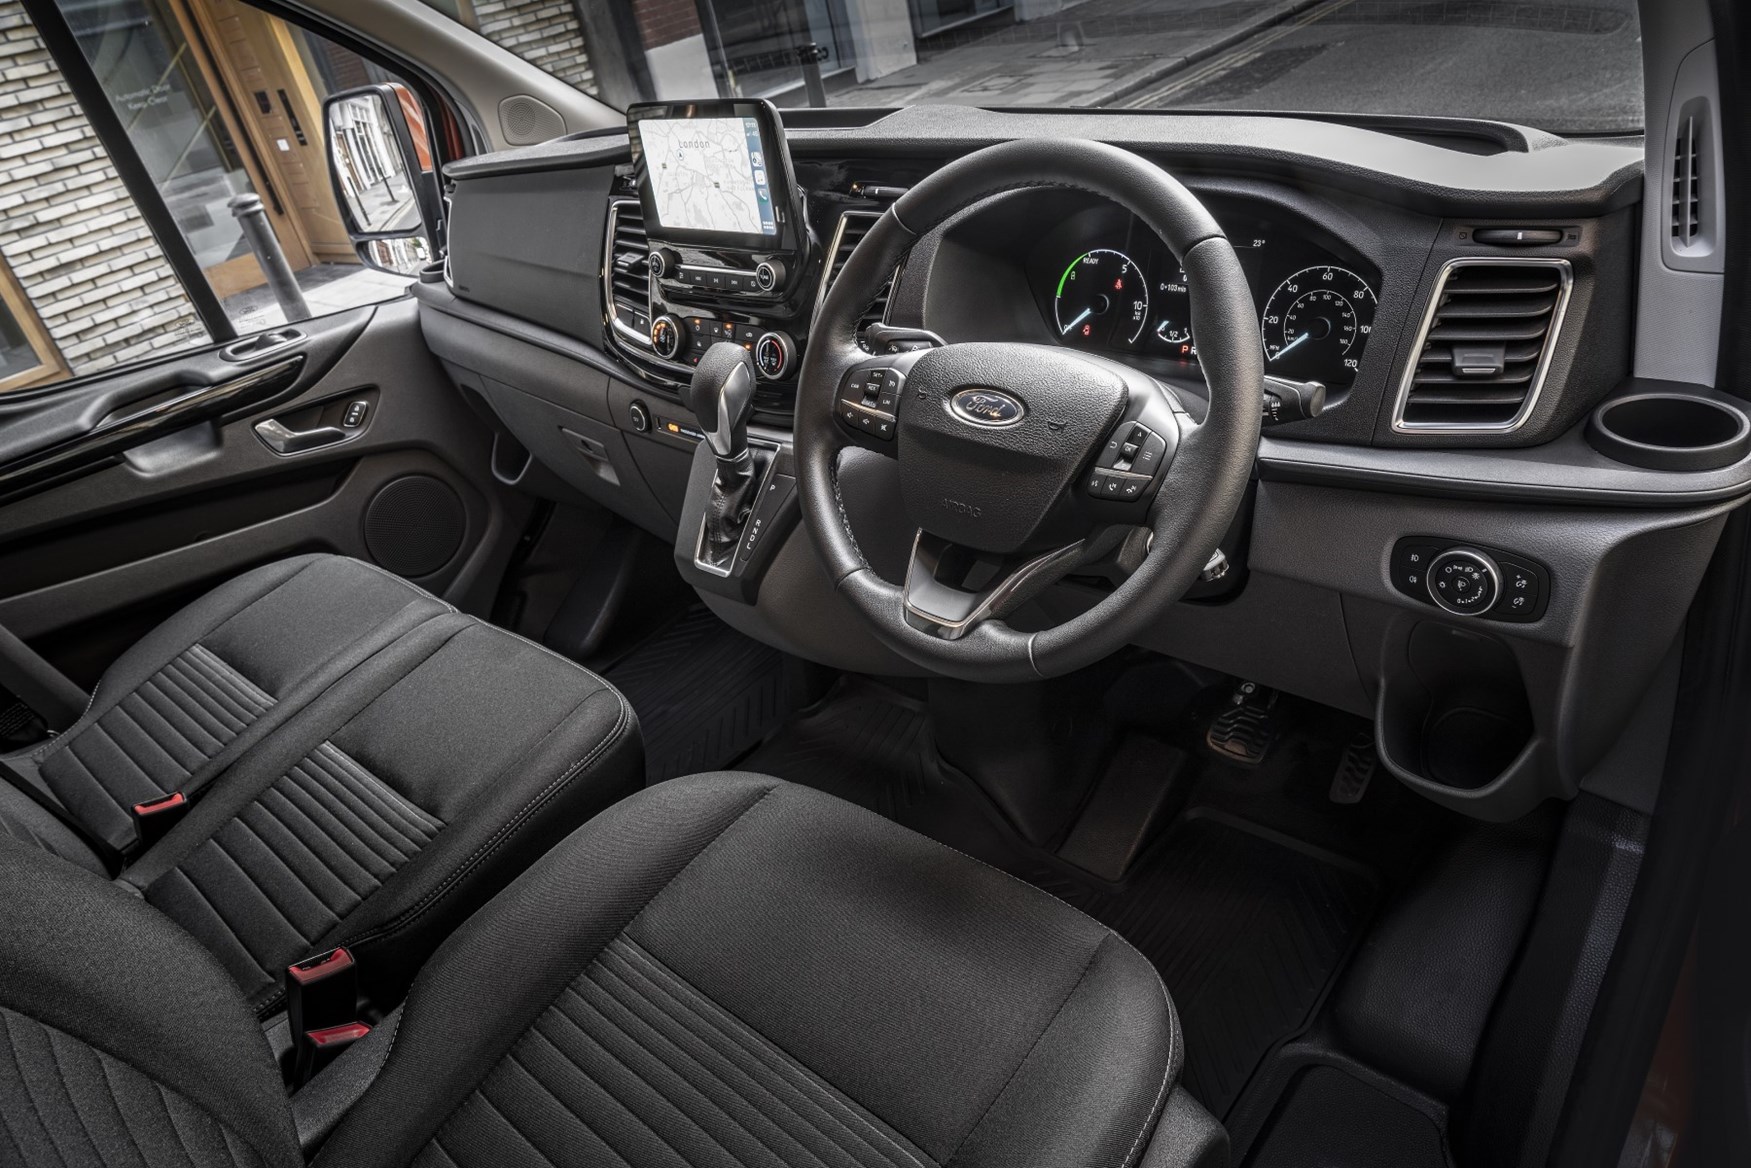 2020 Ford Transit Custom Plug-In Hybrid - interior